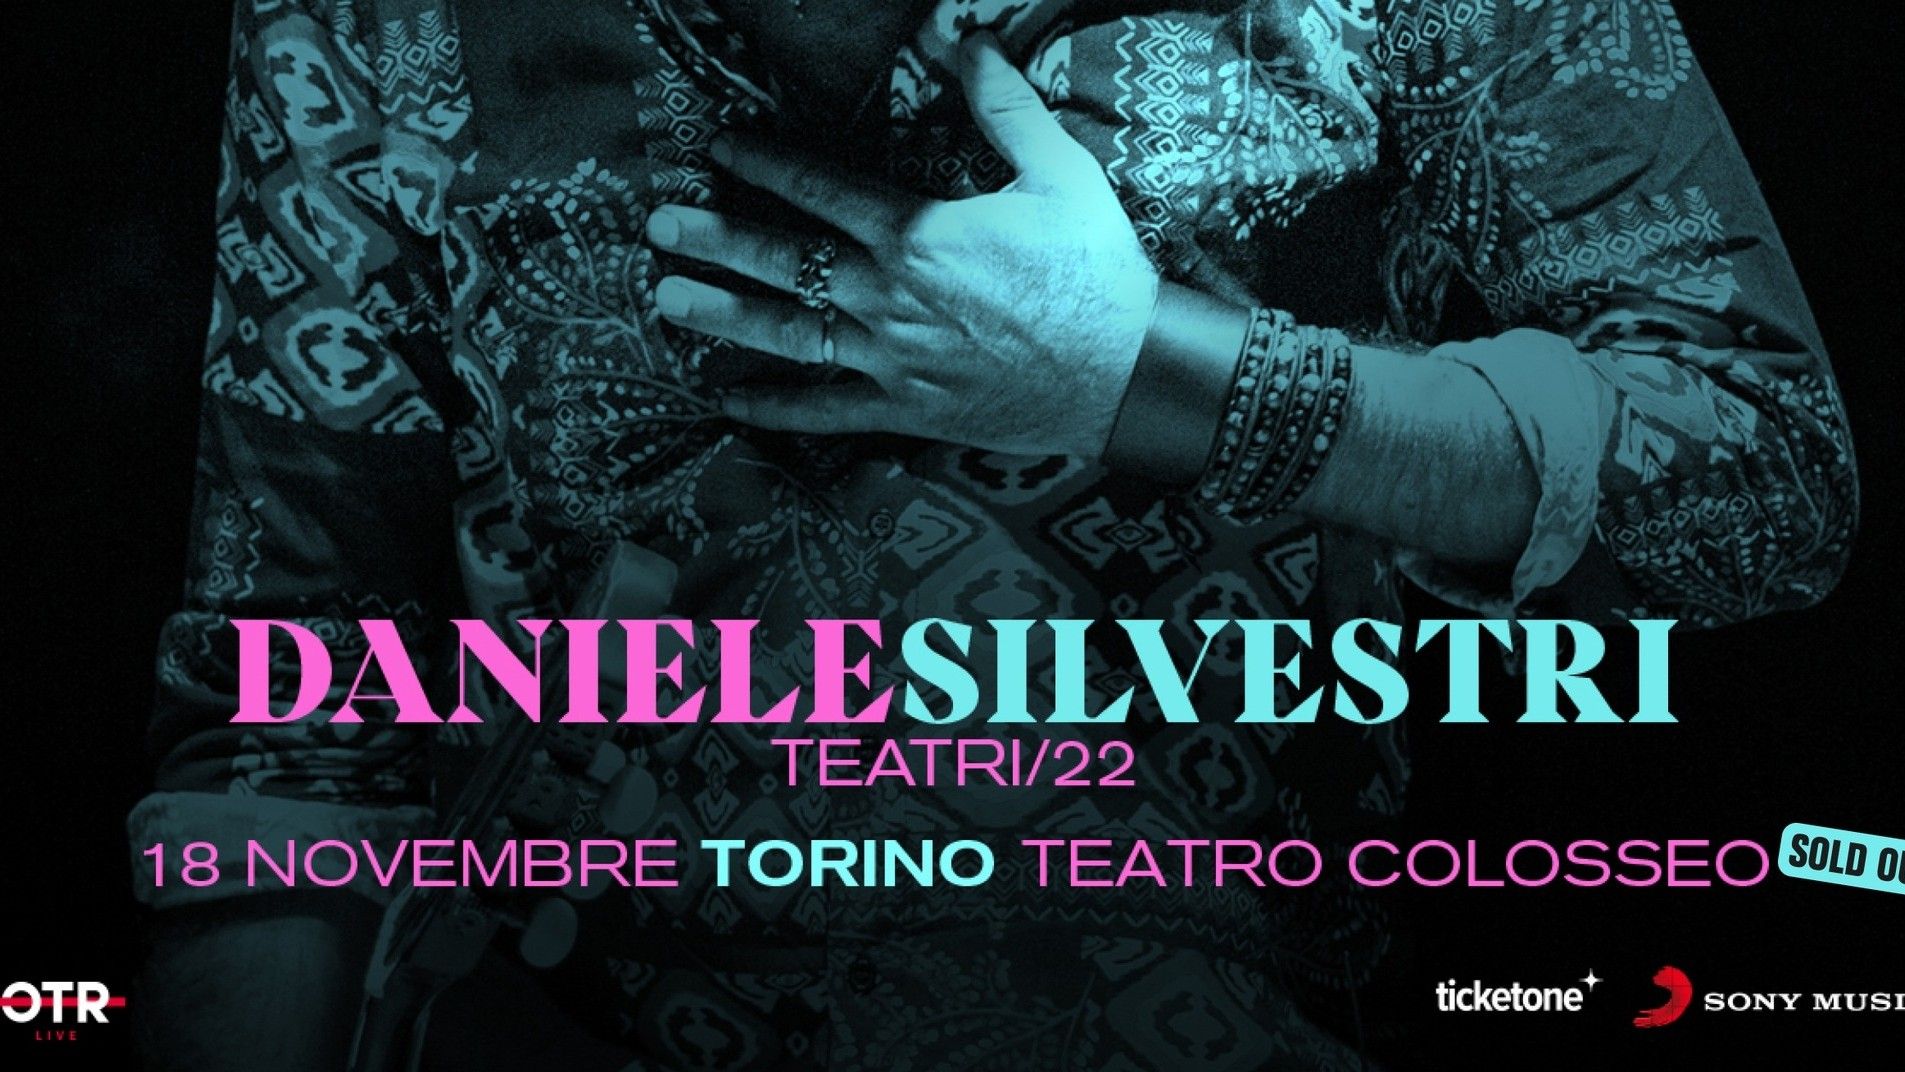 Daniele Silvestri "Teatri 2022" - Sold Out